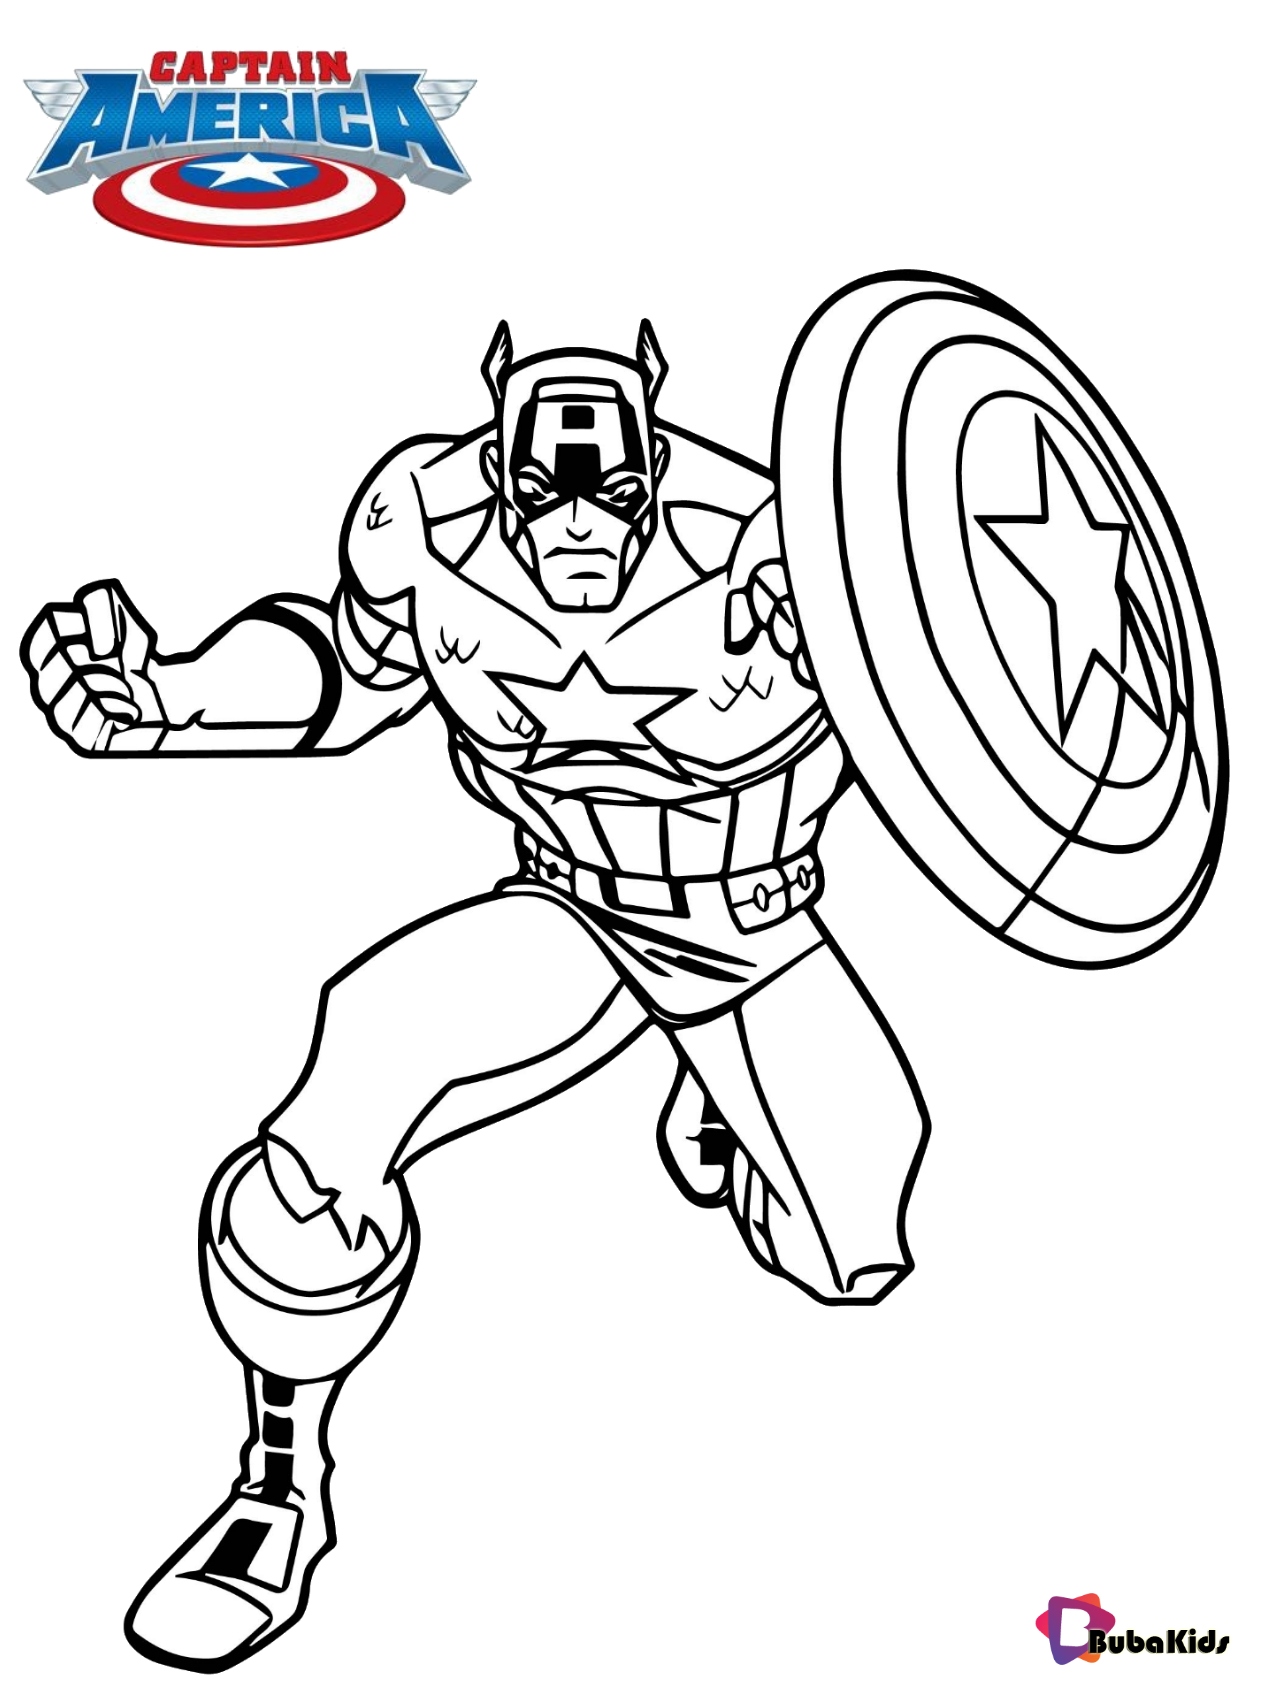 Captain America superhero coloring page for kids Wallpaper